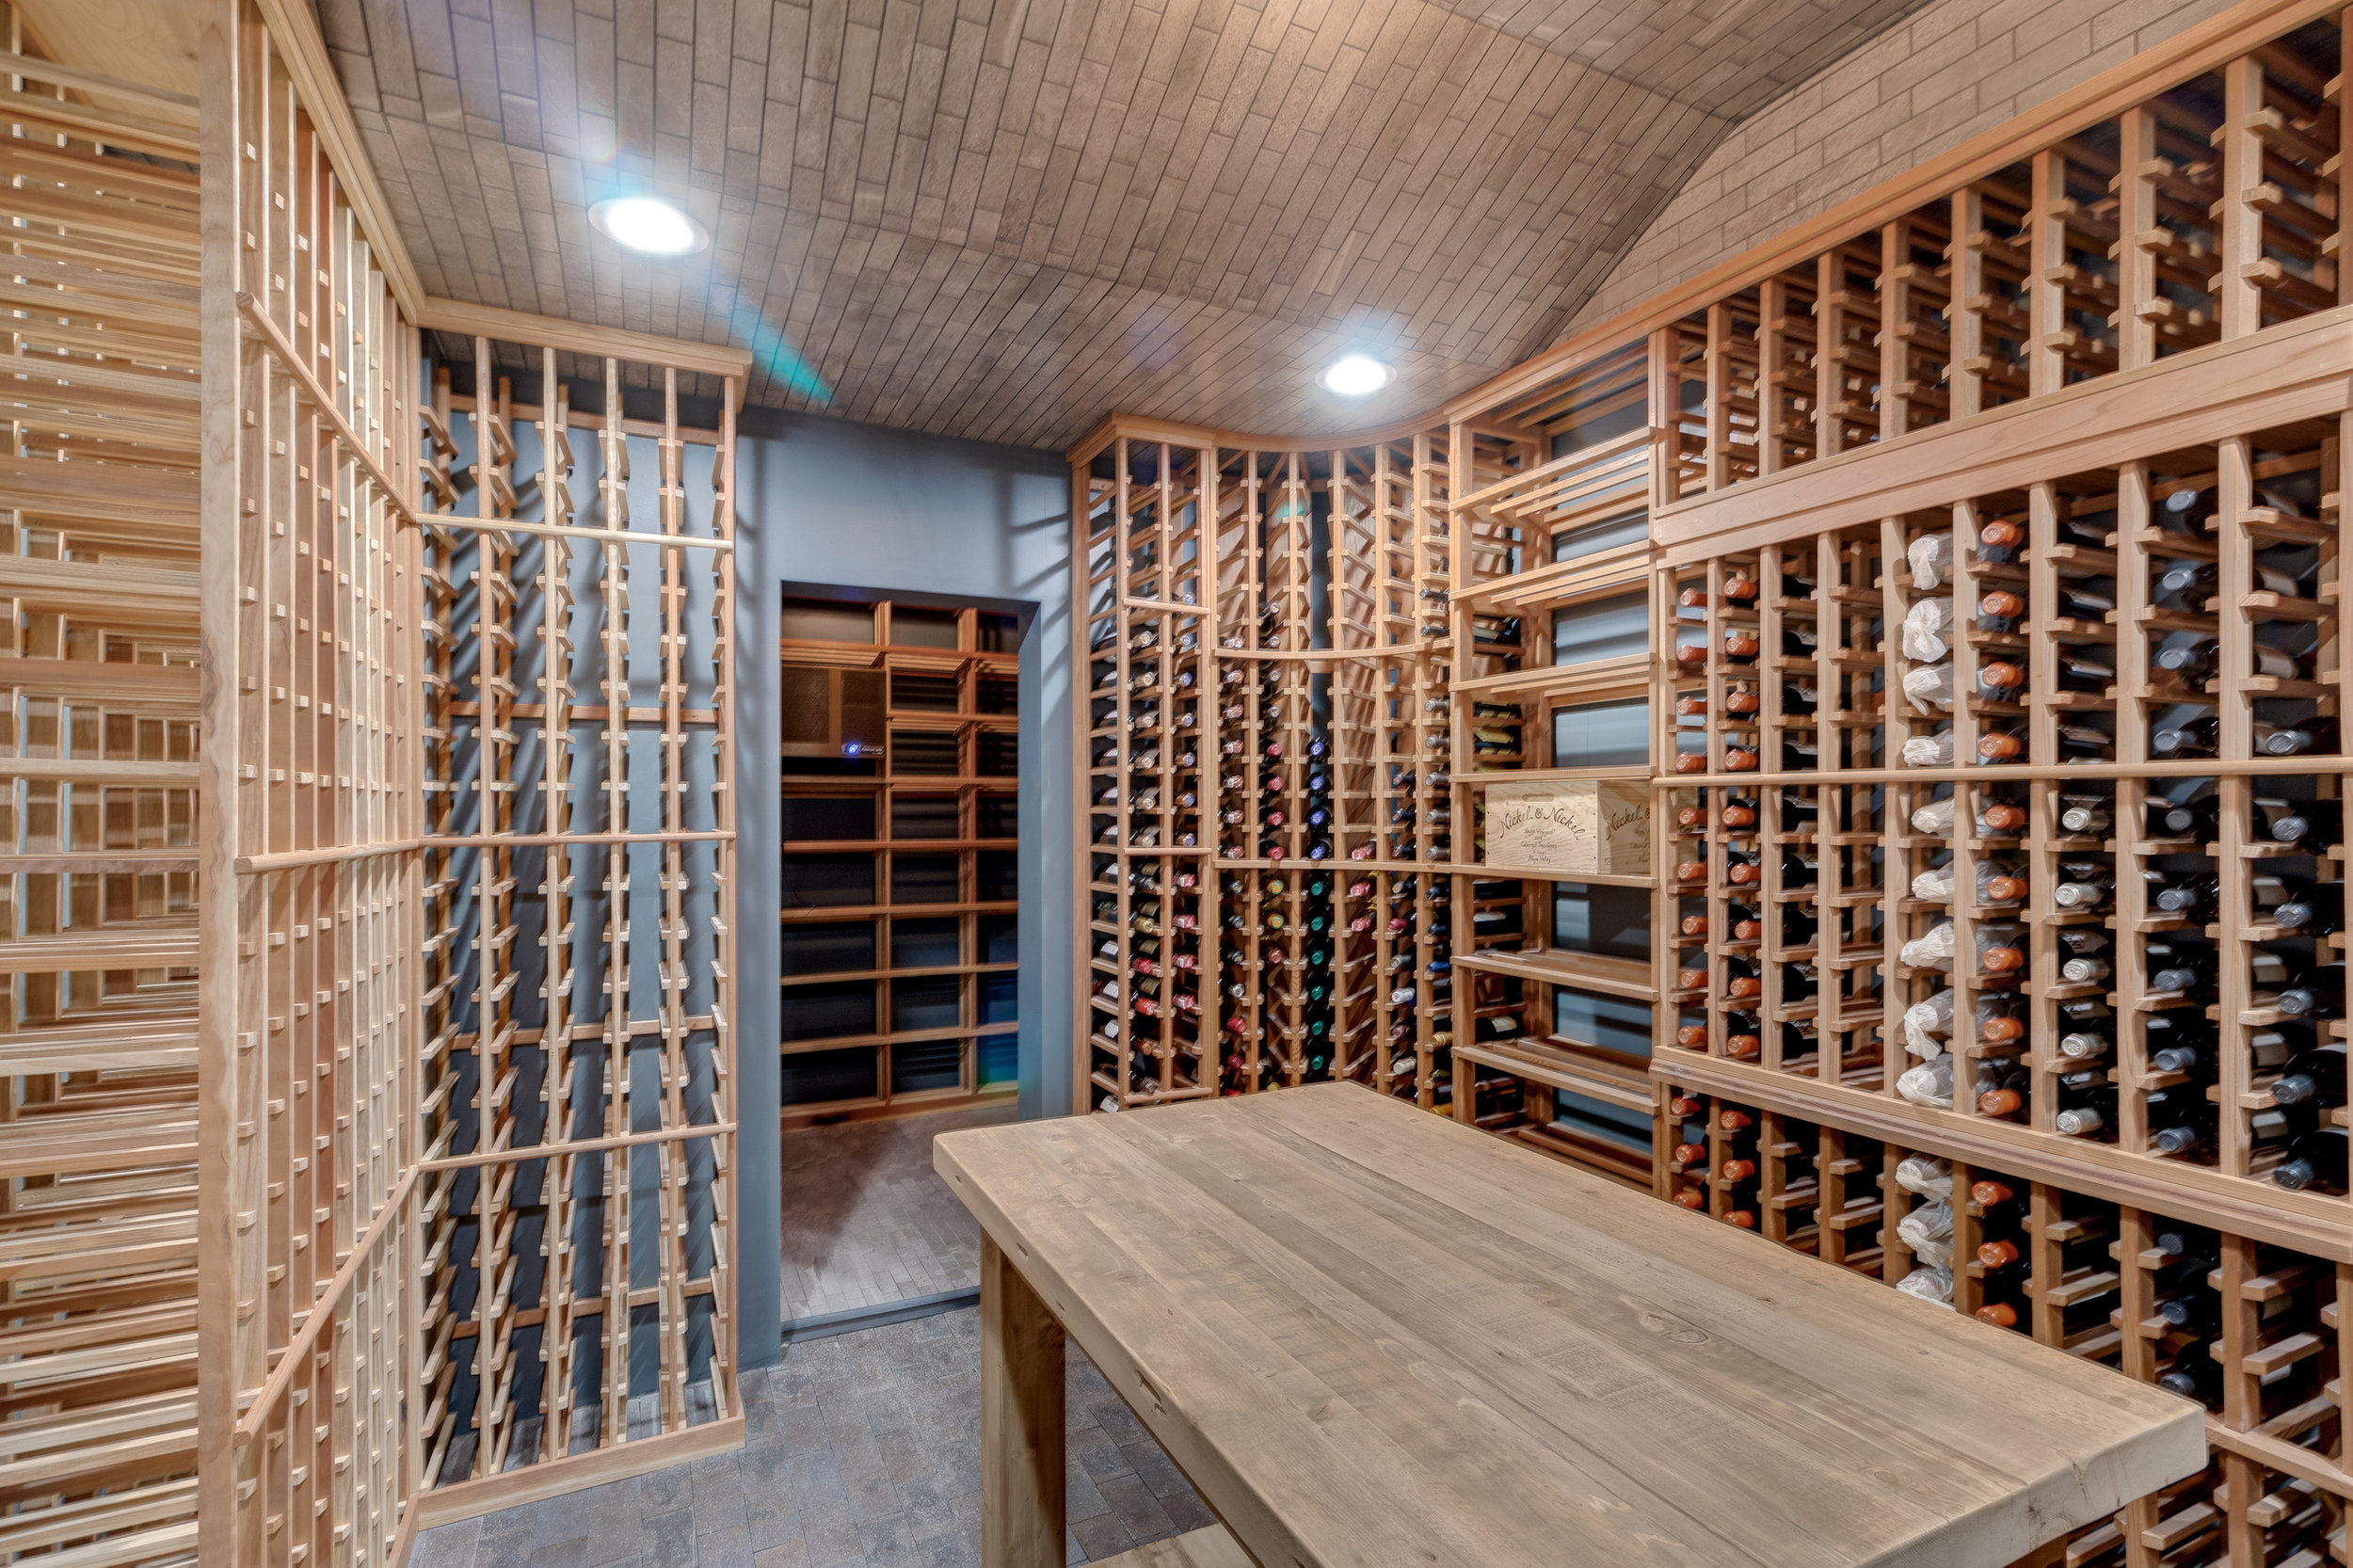 28-Wine cellar in basement.jpg